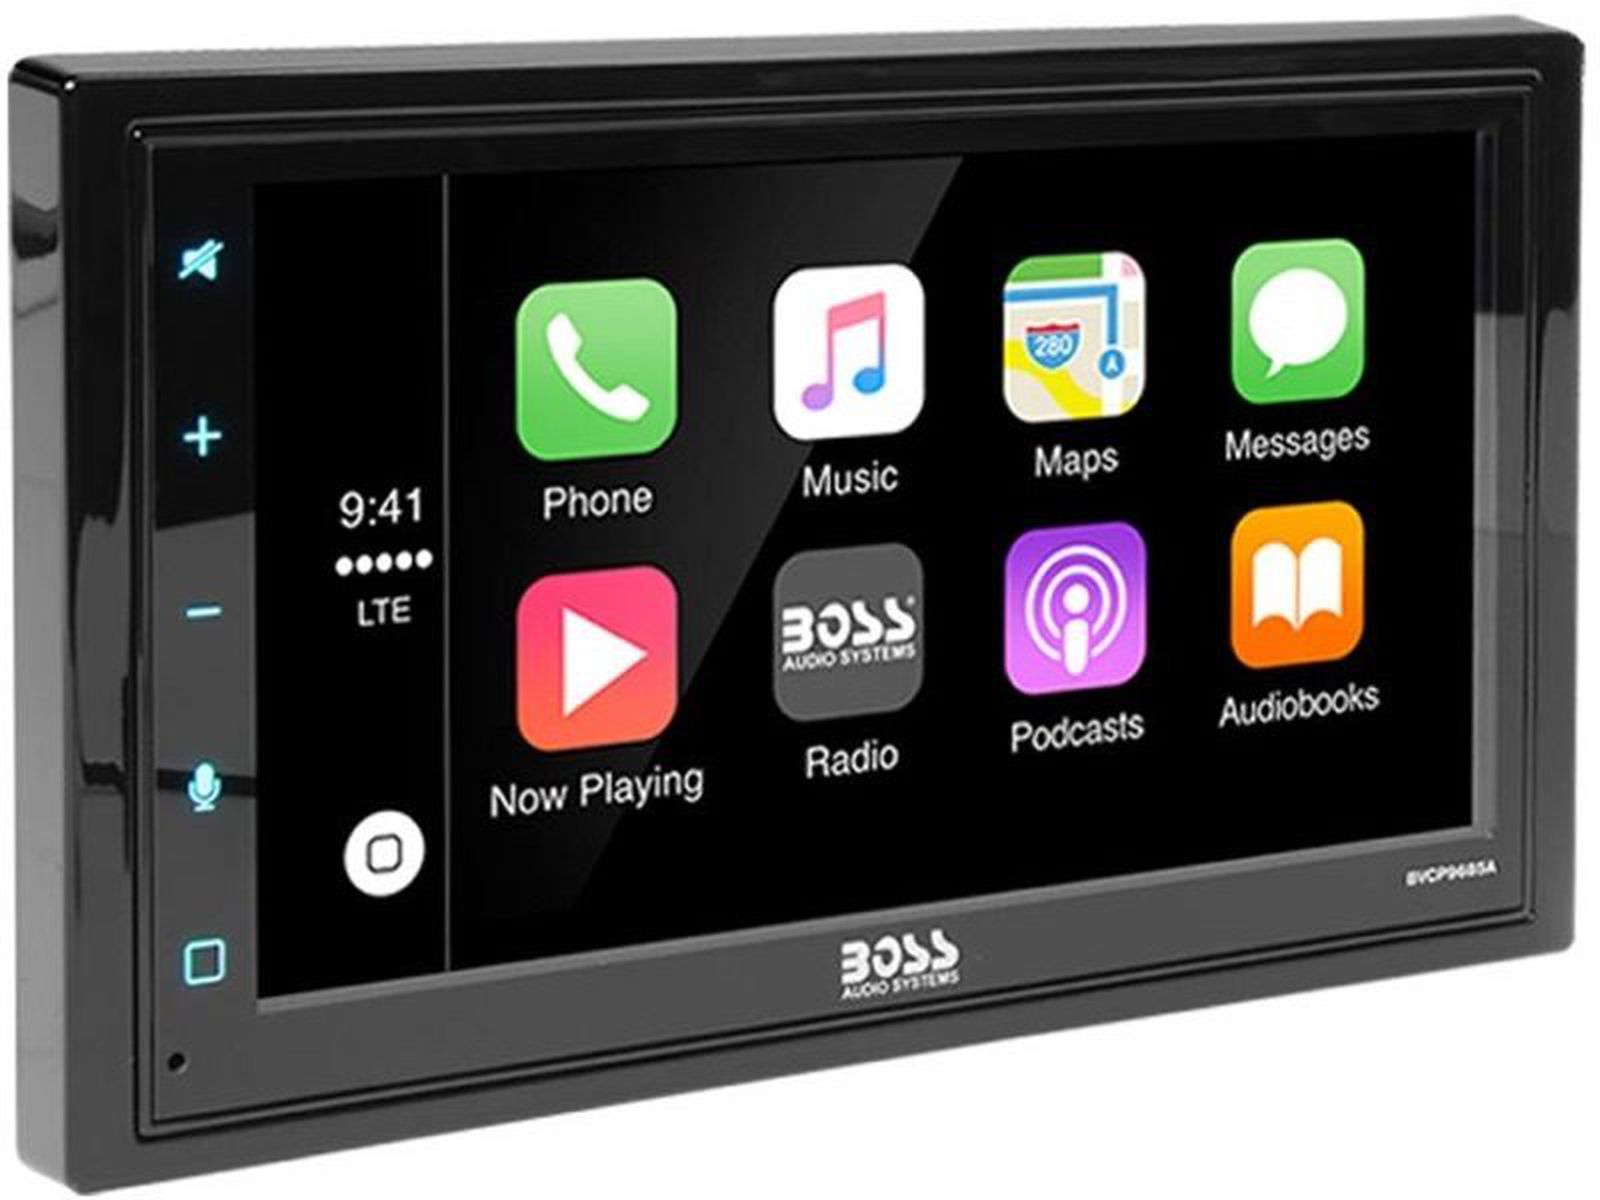 Wireless Apple CarPlay Highlights BOSS Audio's New Stereos- The